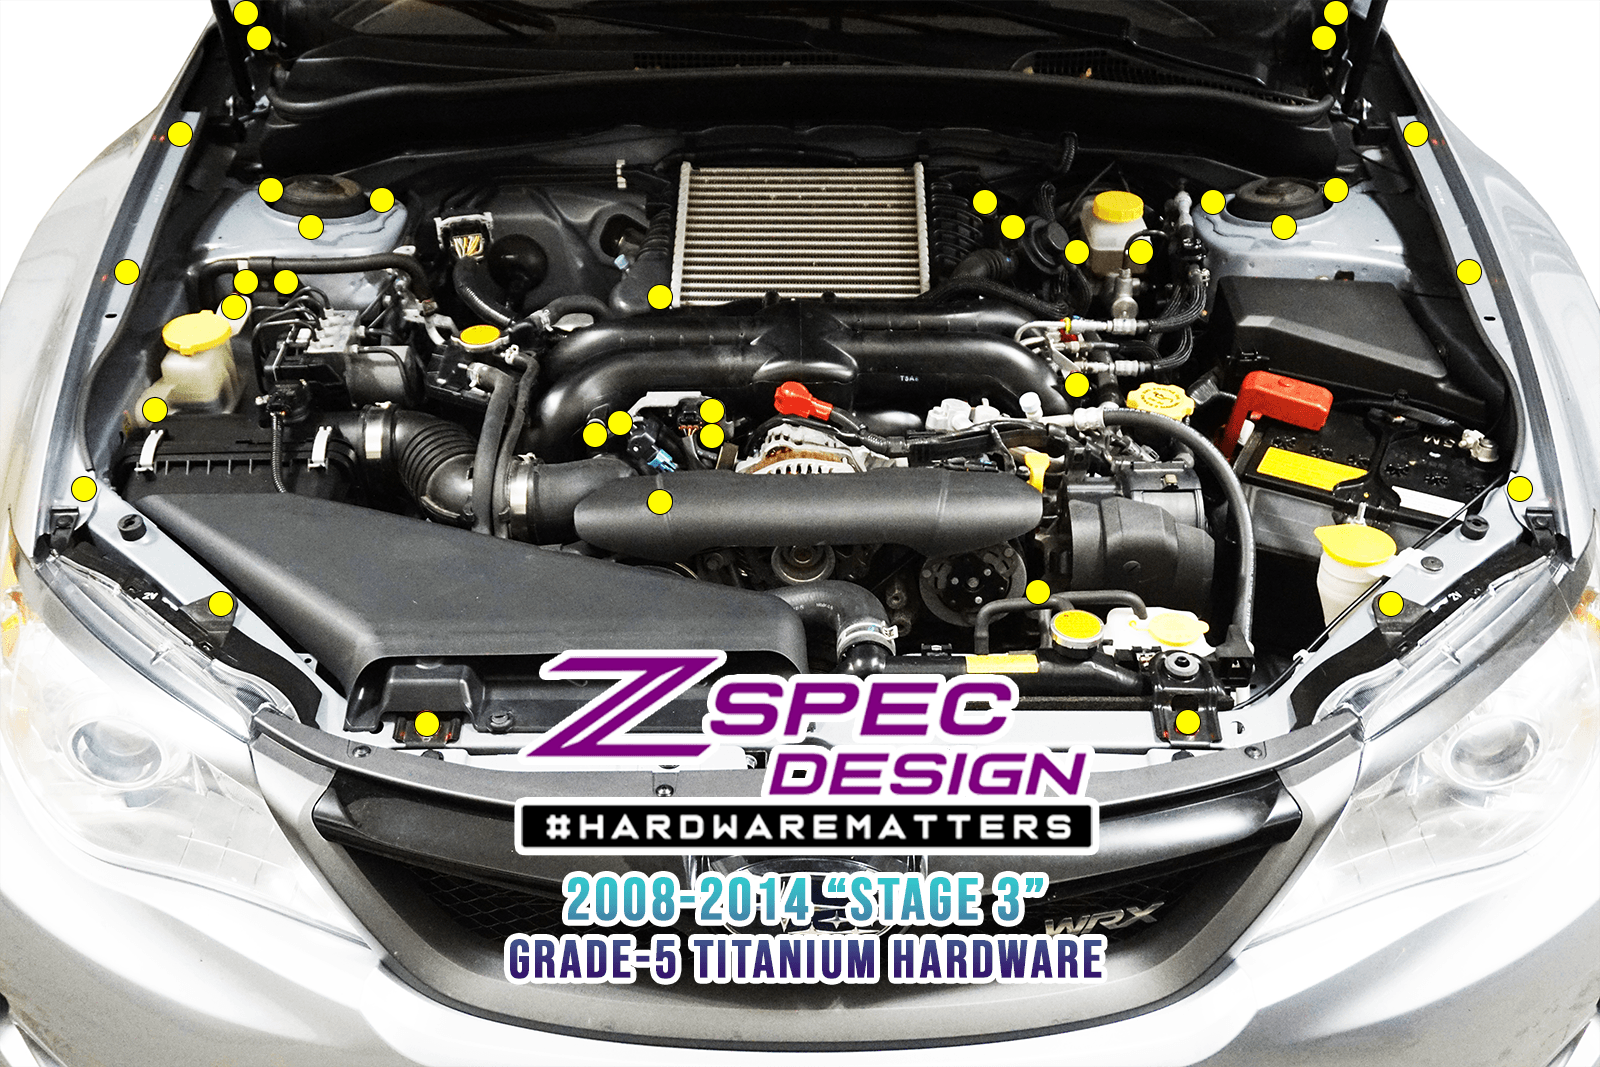 ZSPEC "Stage 3" Dress Up Bolts® Fastener Kit for '08-14 Subaru WRX & STi, Titanium  Keywords Engine Bay Upgrade Performance Merchandise Grade-5 GR5 Dress Up Bolts Hardware Design Car Auto JDM USDM